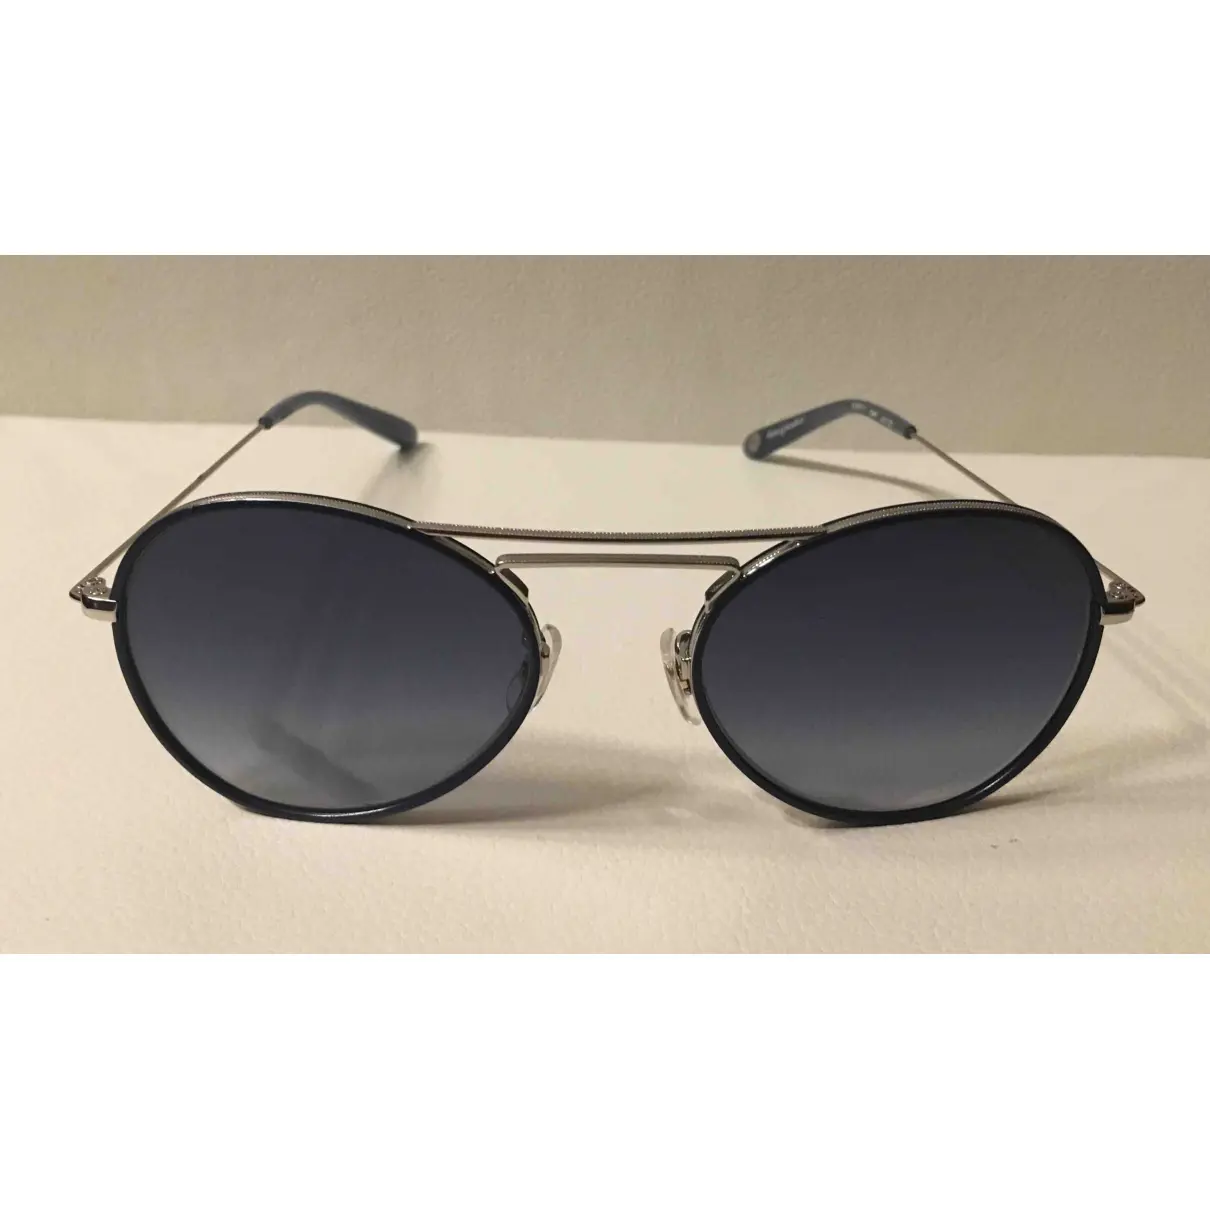 Buy Garrett Leight Aviator sunglasses online